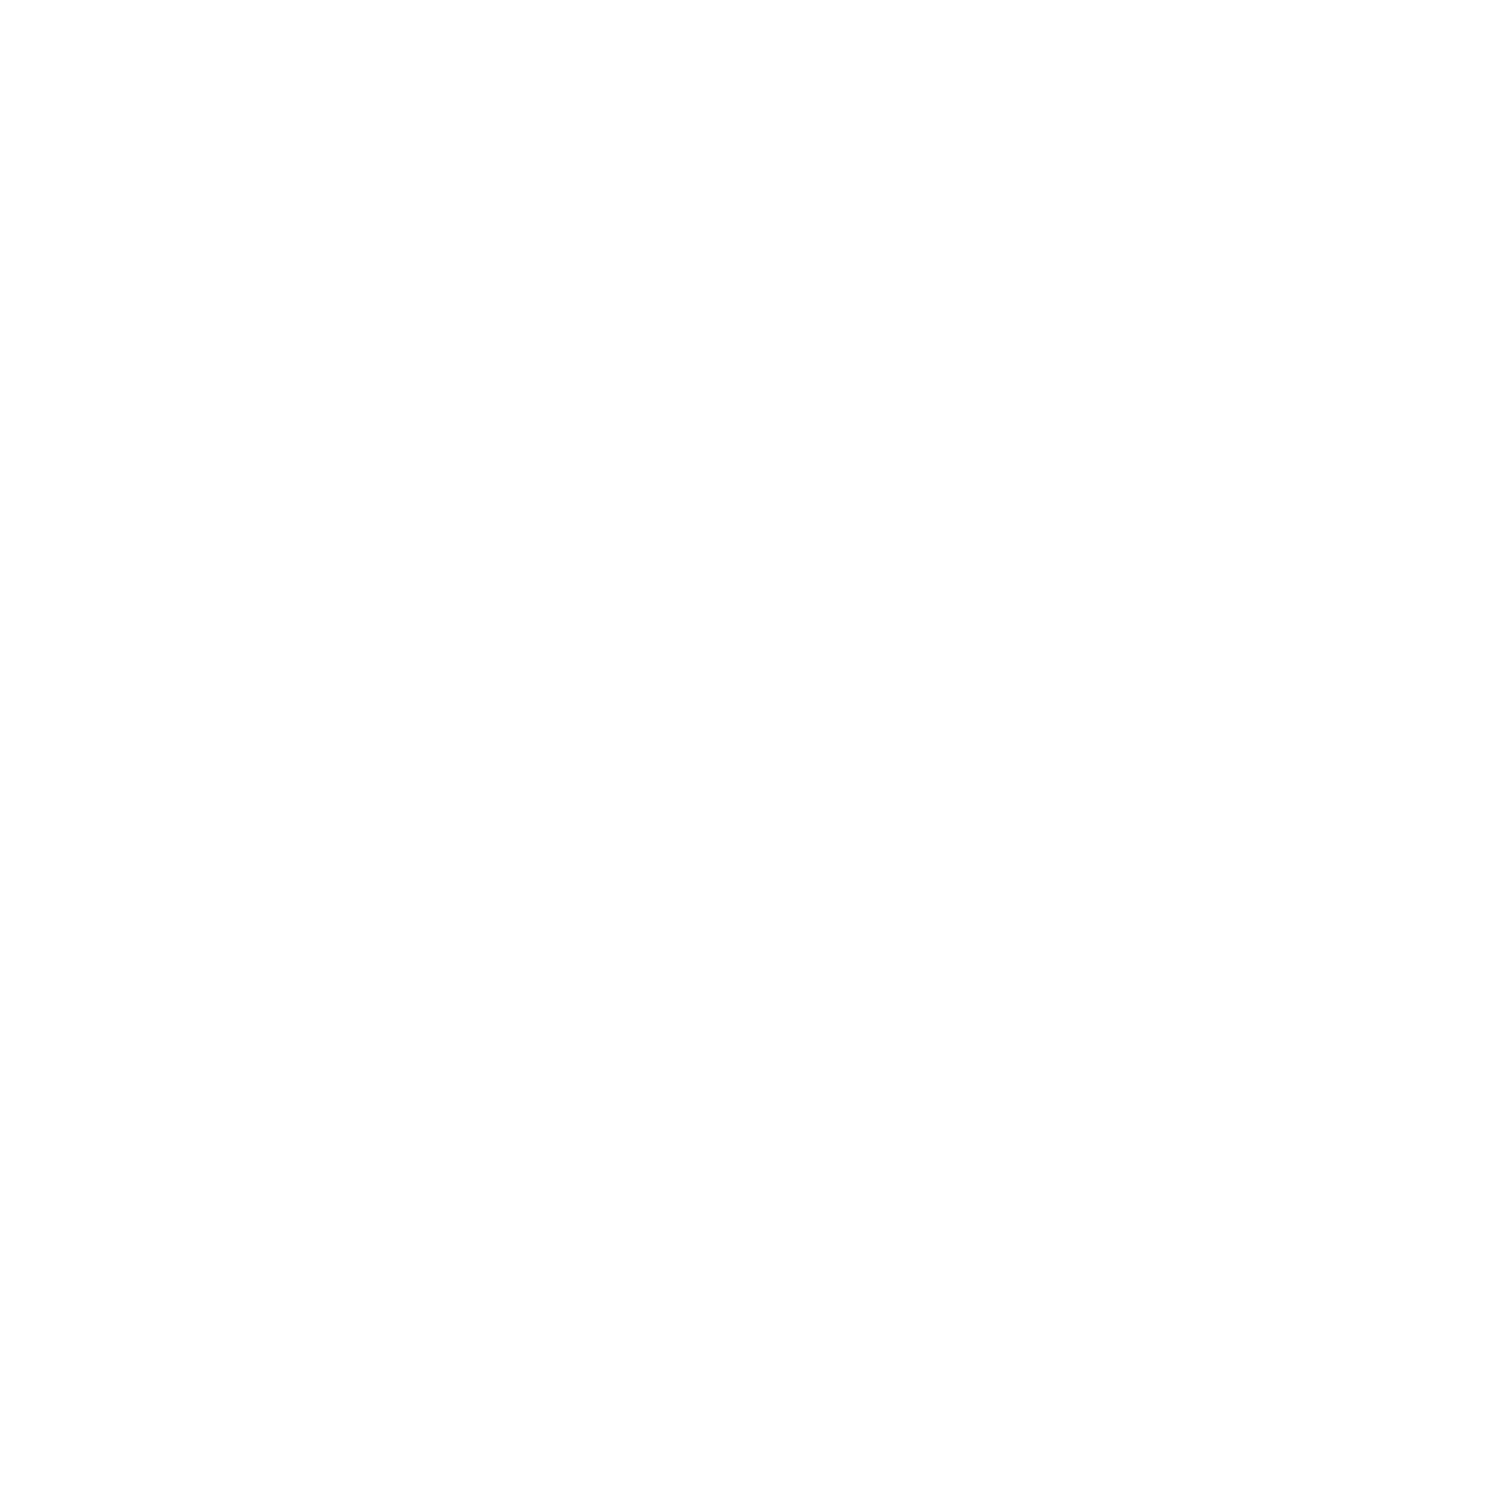 Spaceman Studios